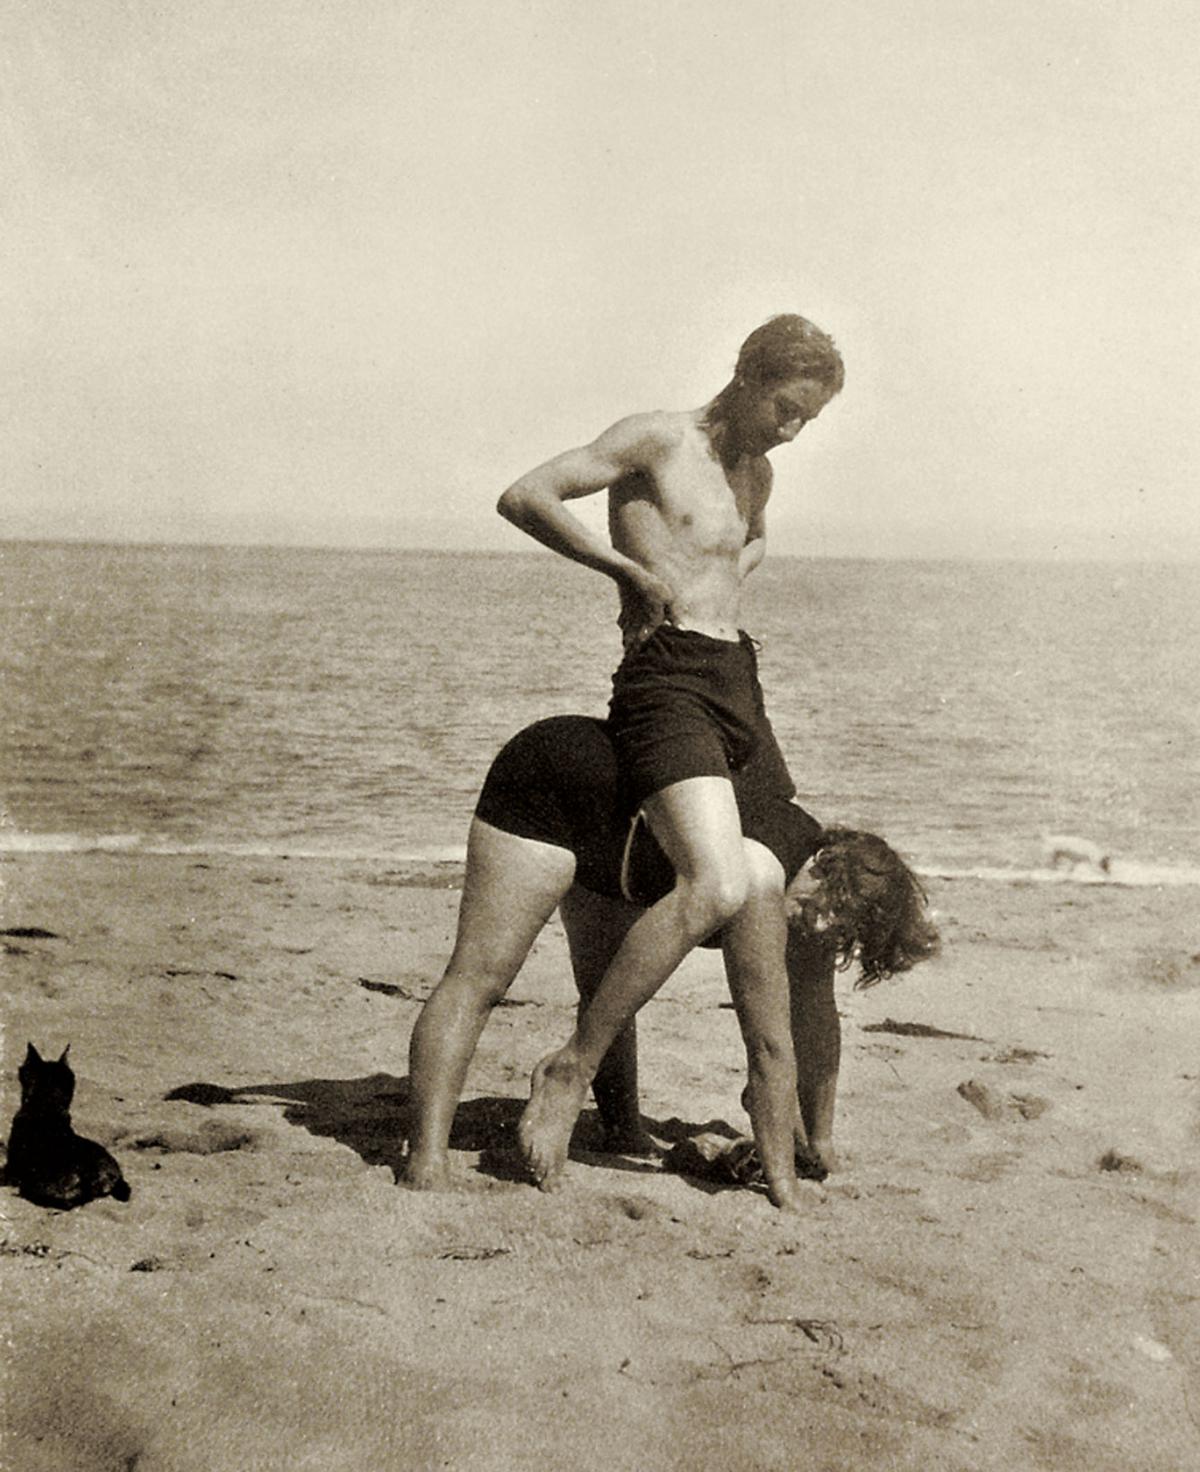 Colette with Bertrand de Jouvenel on vacation in Roz-ven (near Saint-Malo) in the 1910s. A place that evokes “Le Blé en herbe”.